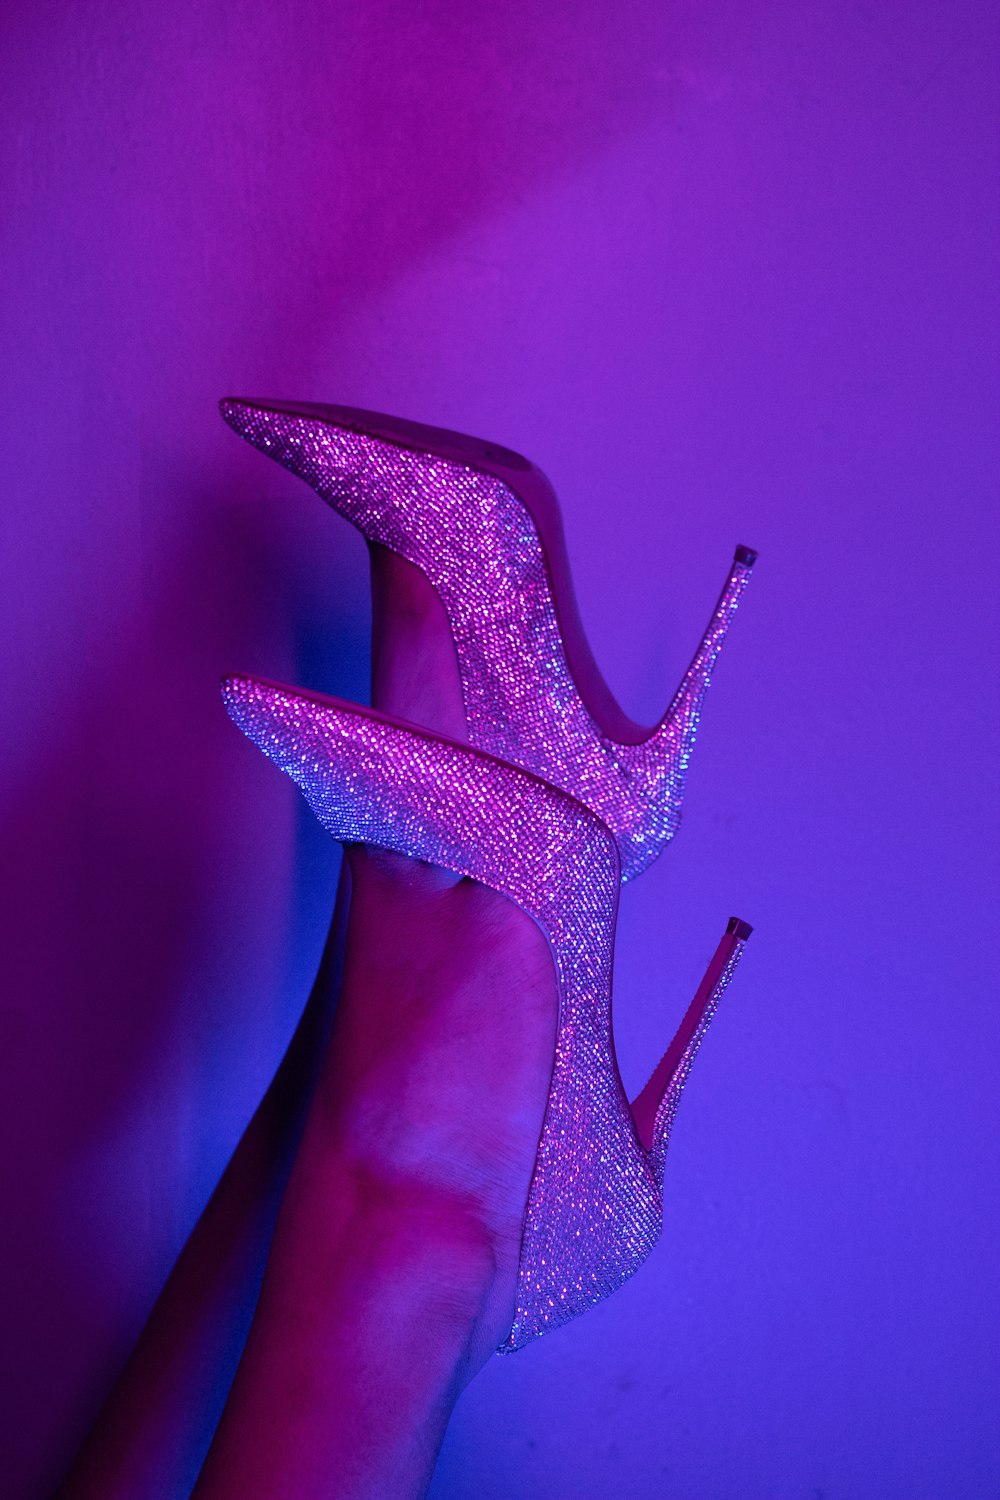 a woman's hand holding a purple high heel shoe